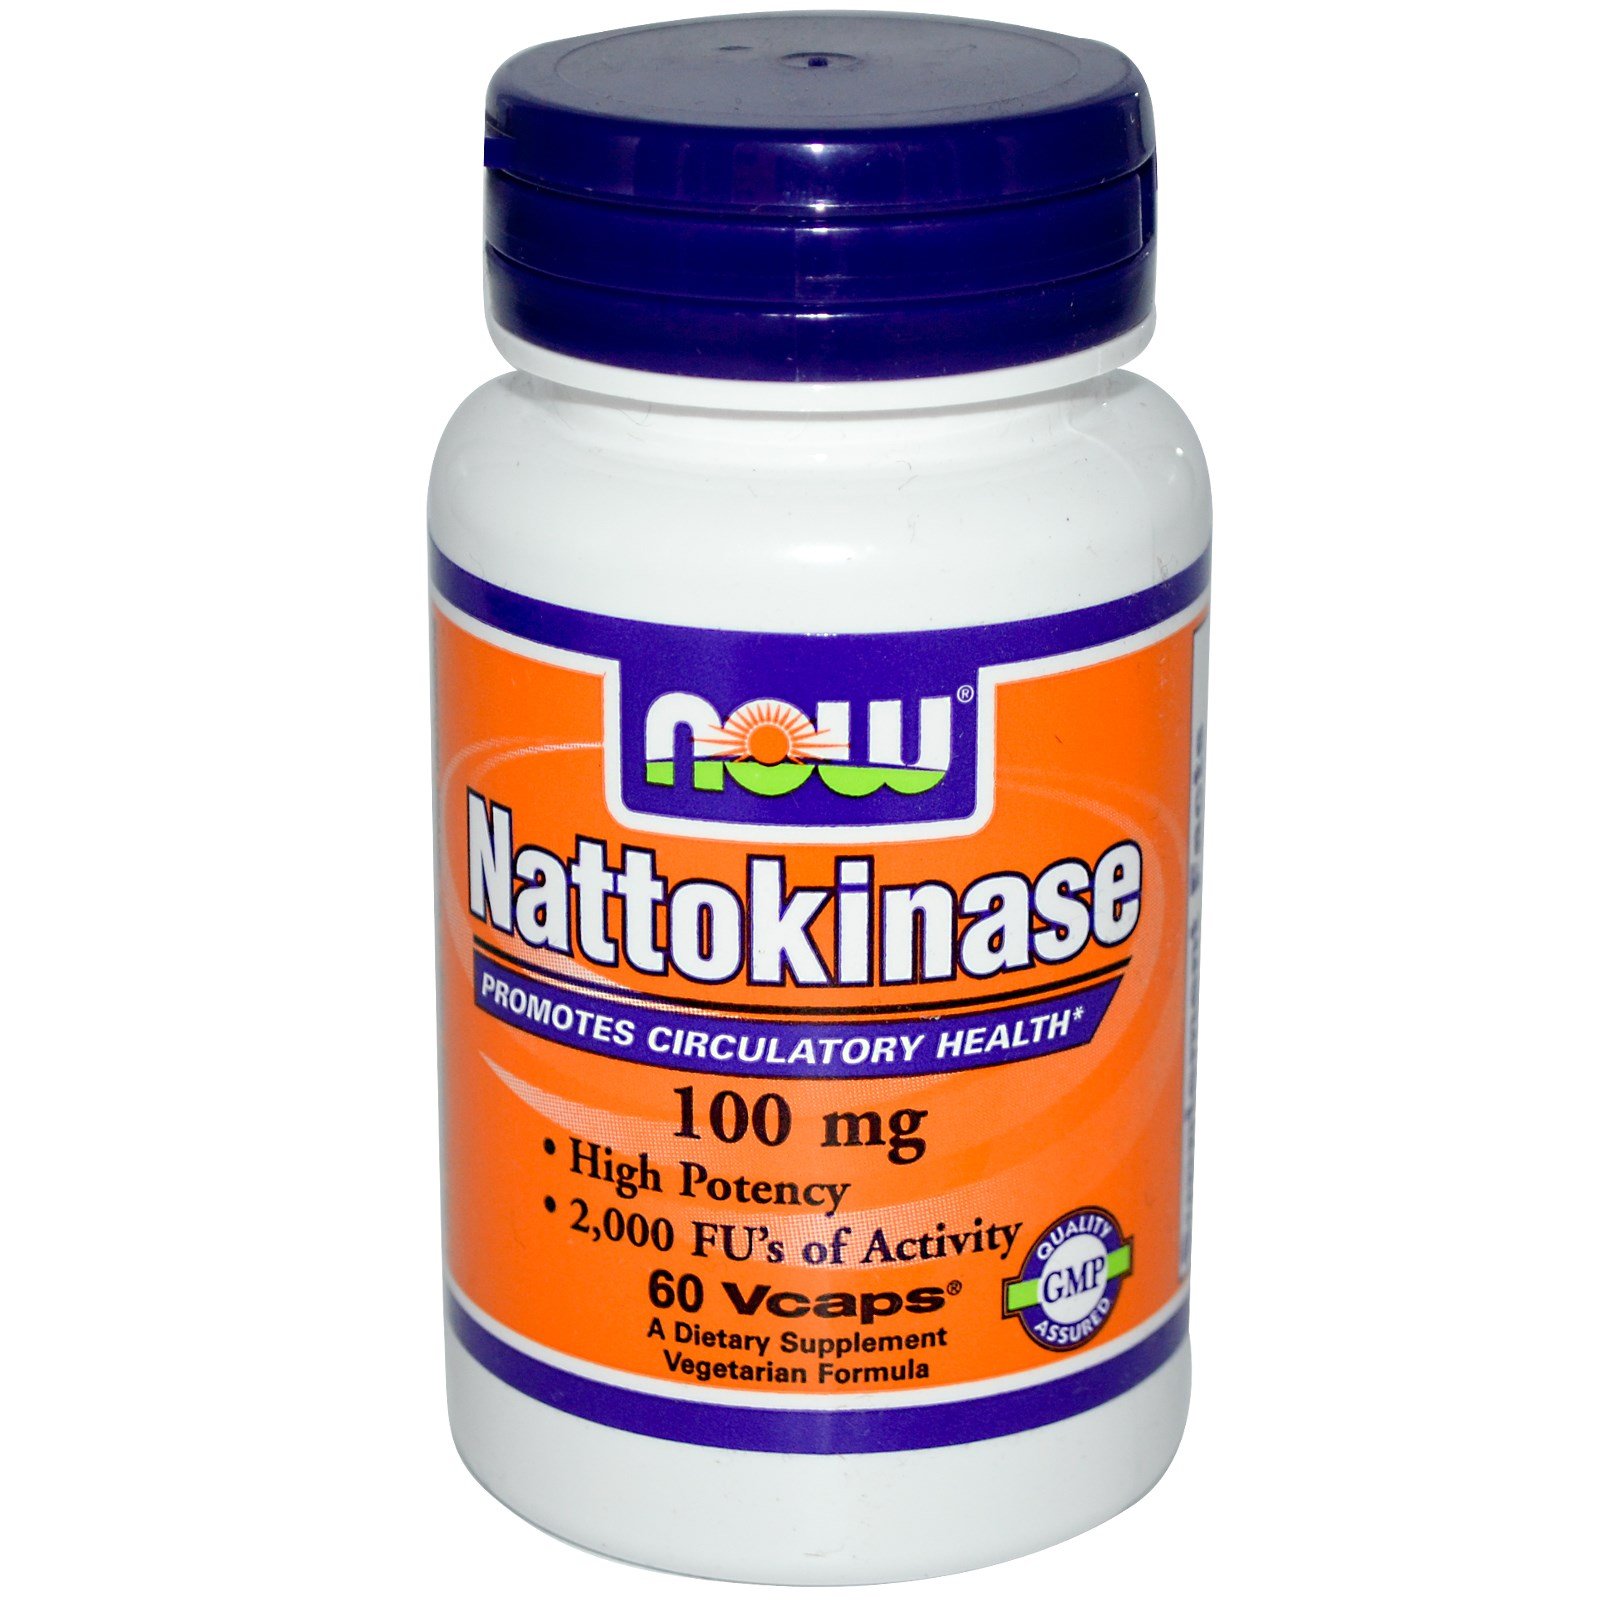 Nattokinase, 60 pcs, Now. Special supplements. 